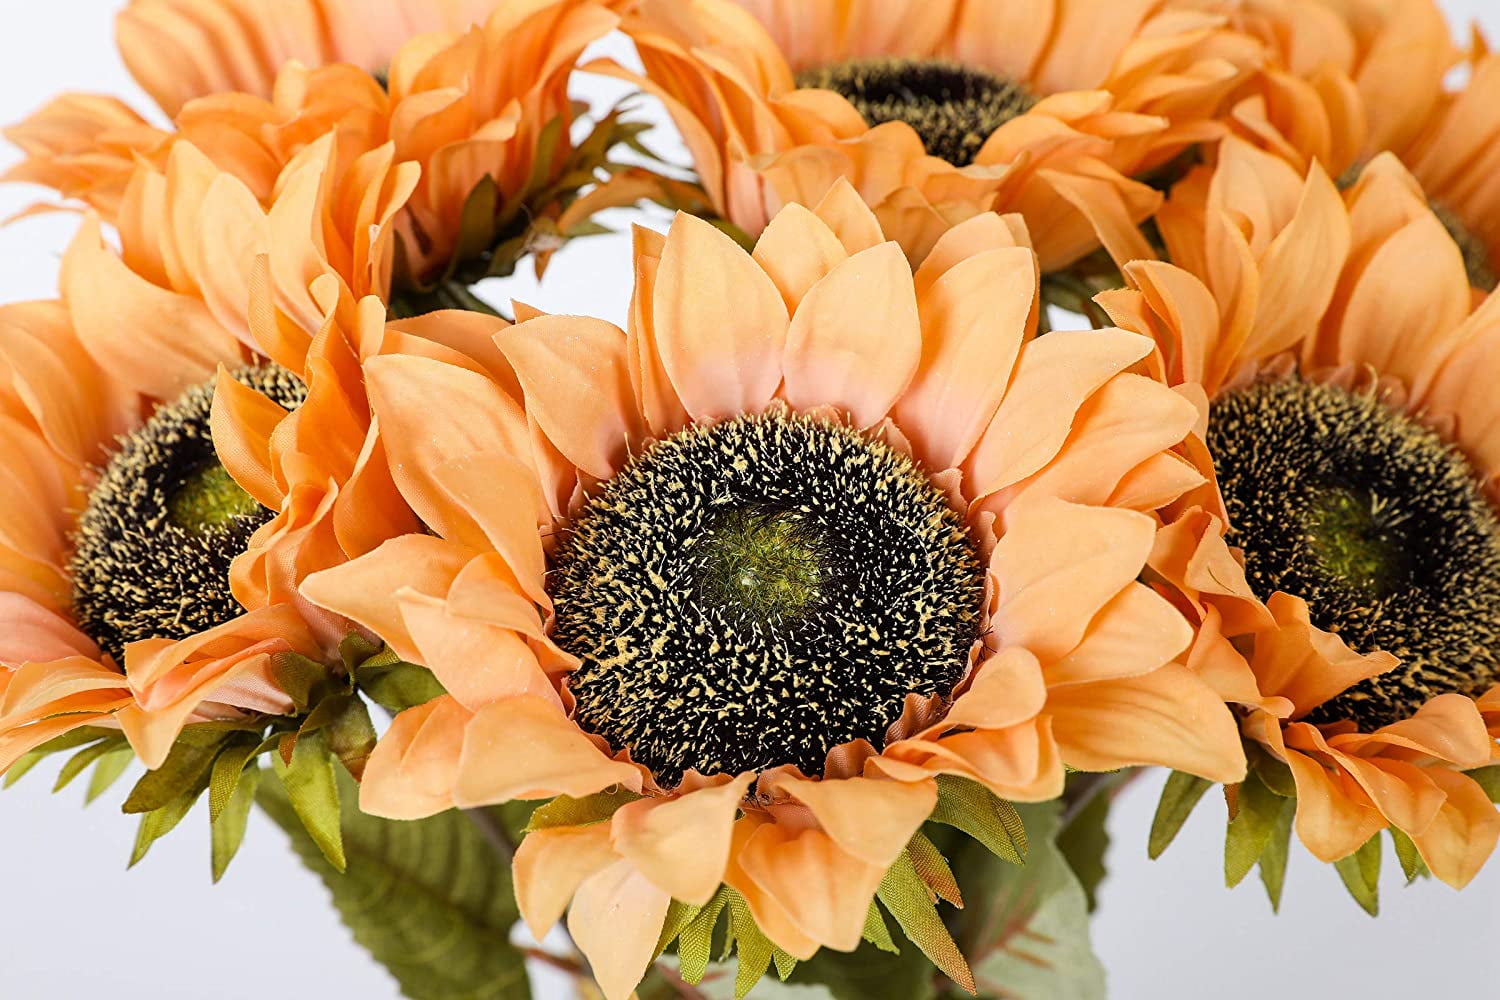  Uieke 4PCS Sunflowers Artificial Flowers, Fake Silk Sunflowers  Flowers with 7 Stems, Outdoor Fall Flowers for Indoor Home Centerpieces  Wedding Bouquet Arrangement Office DIY Décor (Orange Yellow) : Home &  Kitchen